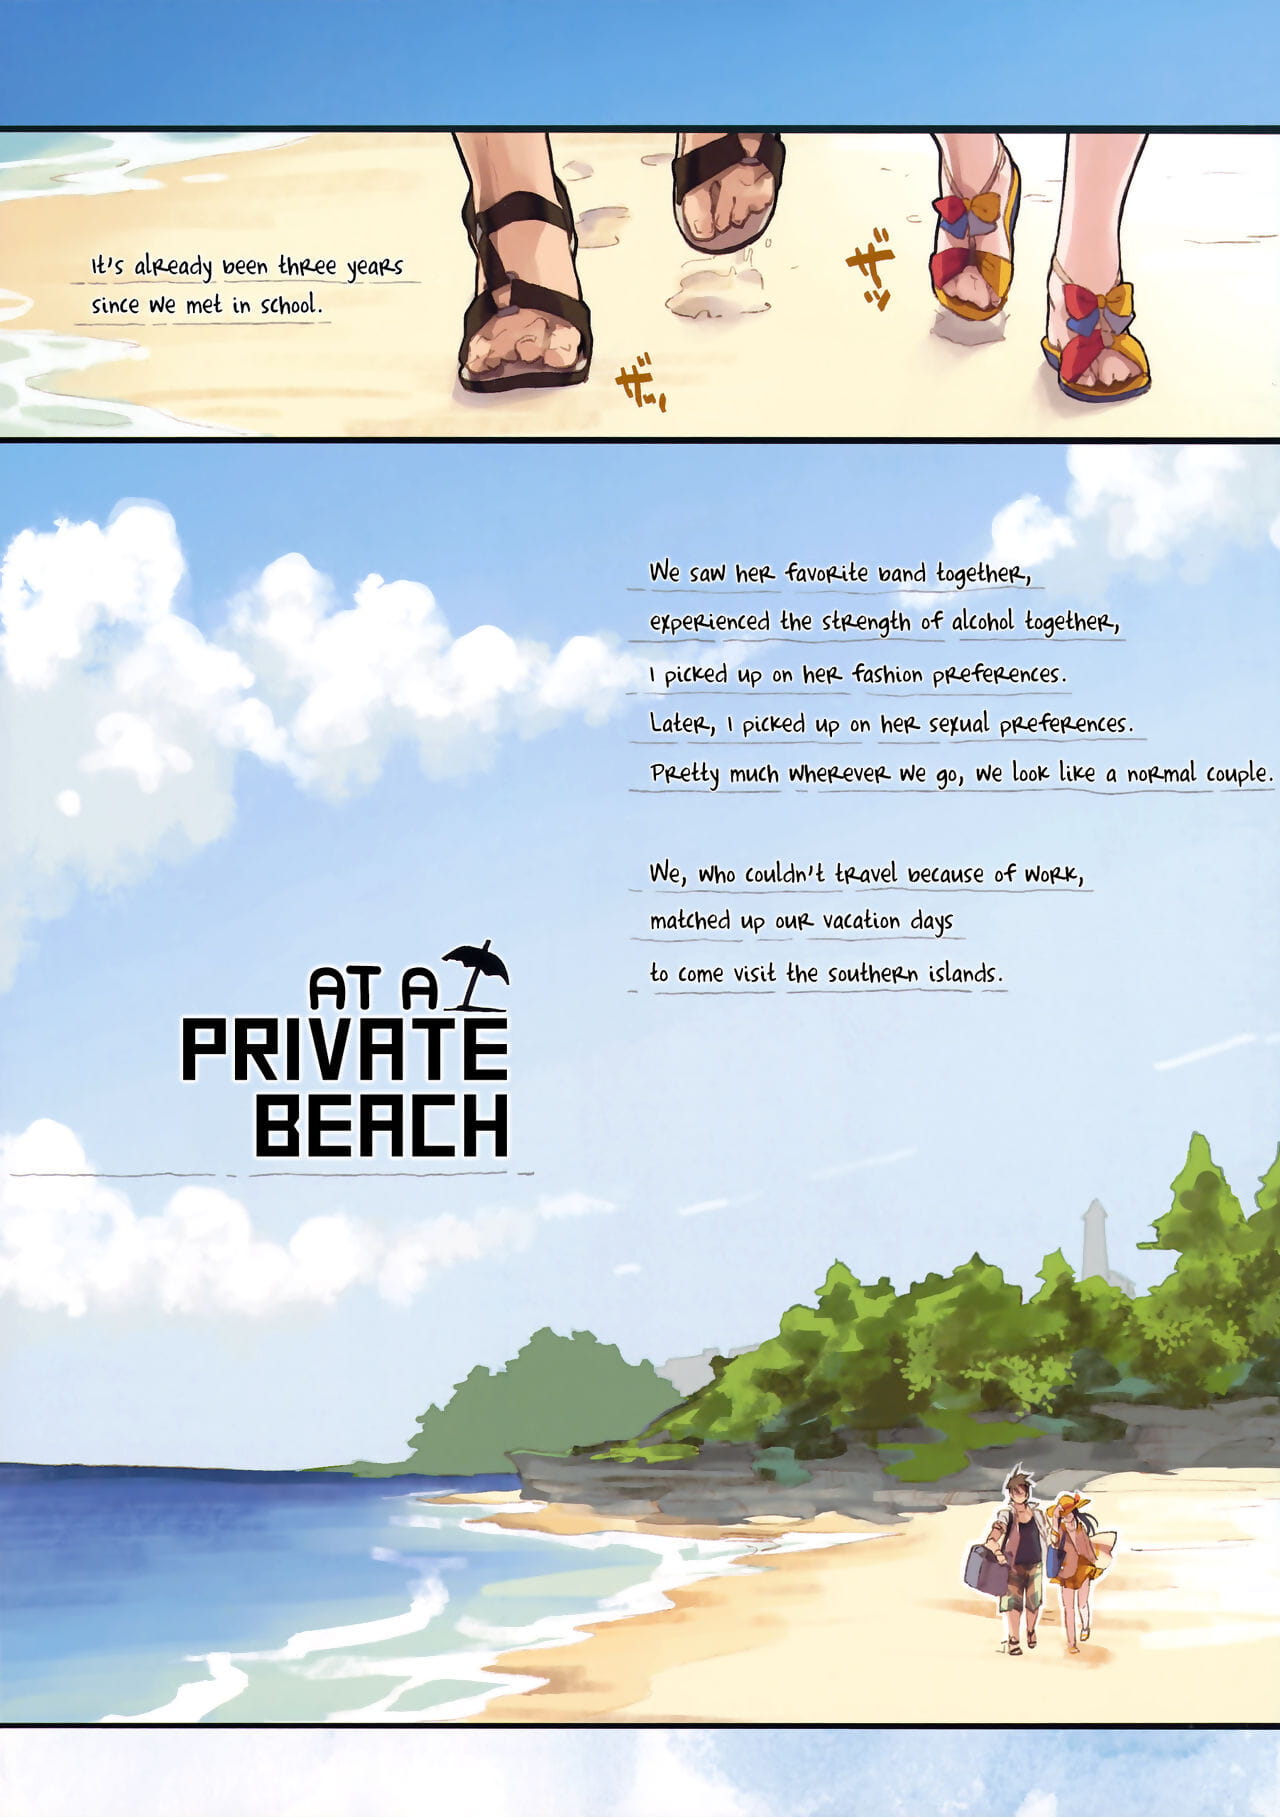 Private 비치 nite page 1